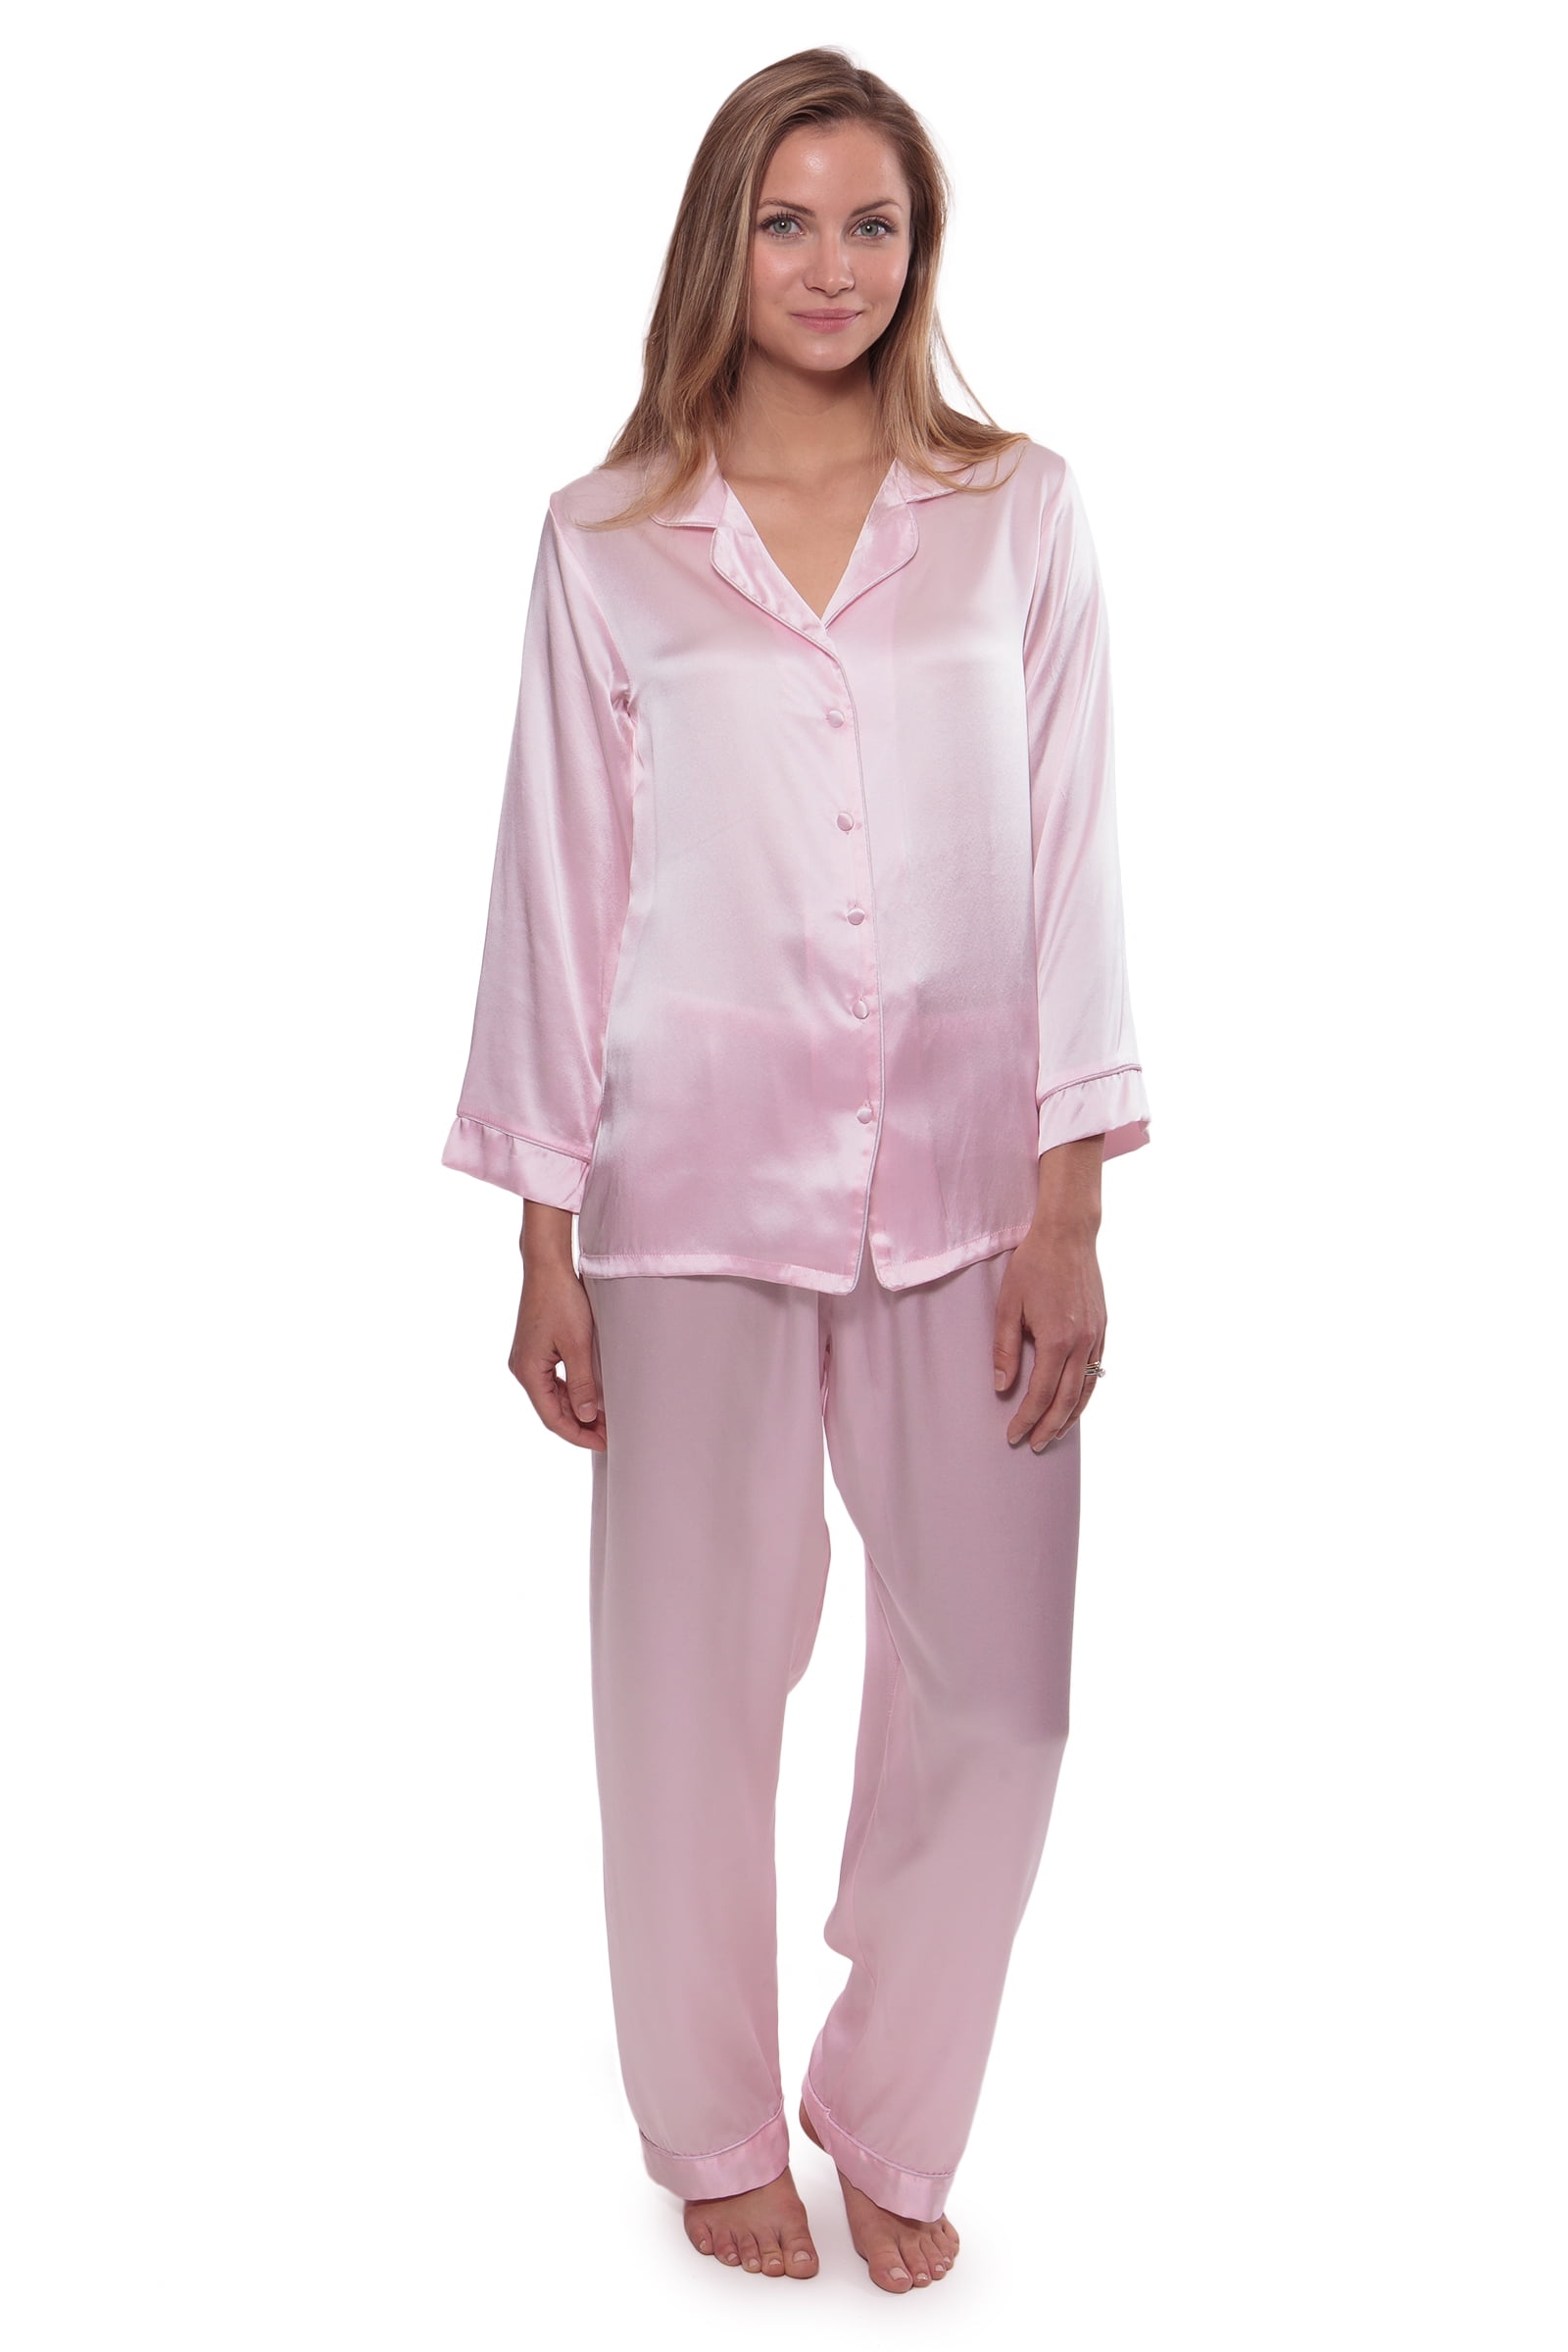 Texeresilk Womens Luxury Silk Pajama Set Beautiful Sleepwear T Ideas 